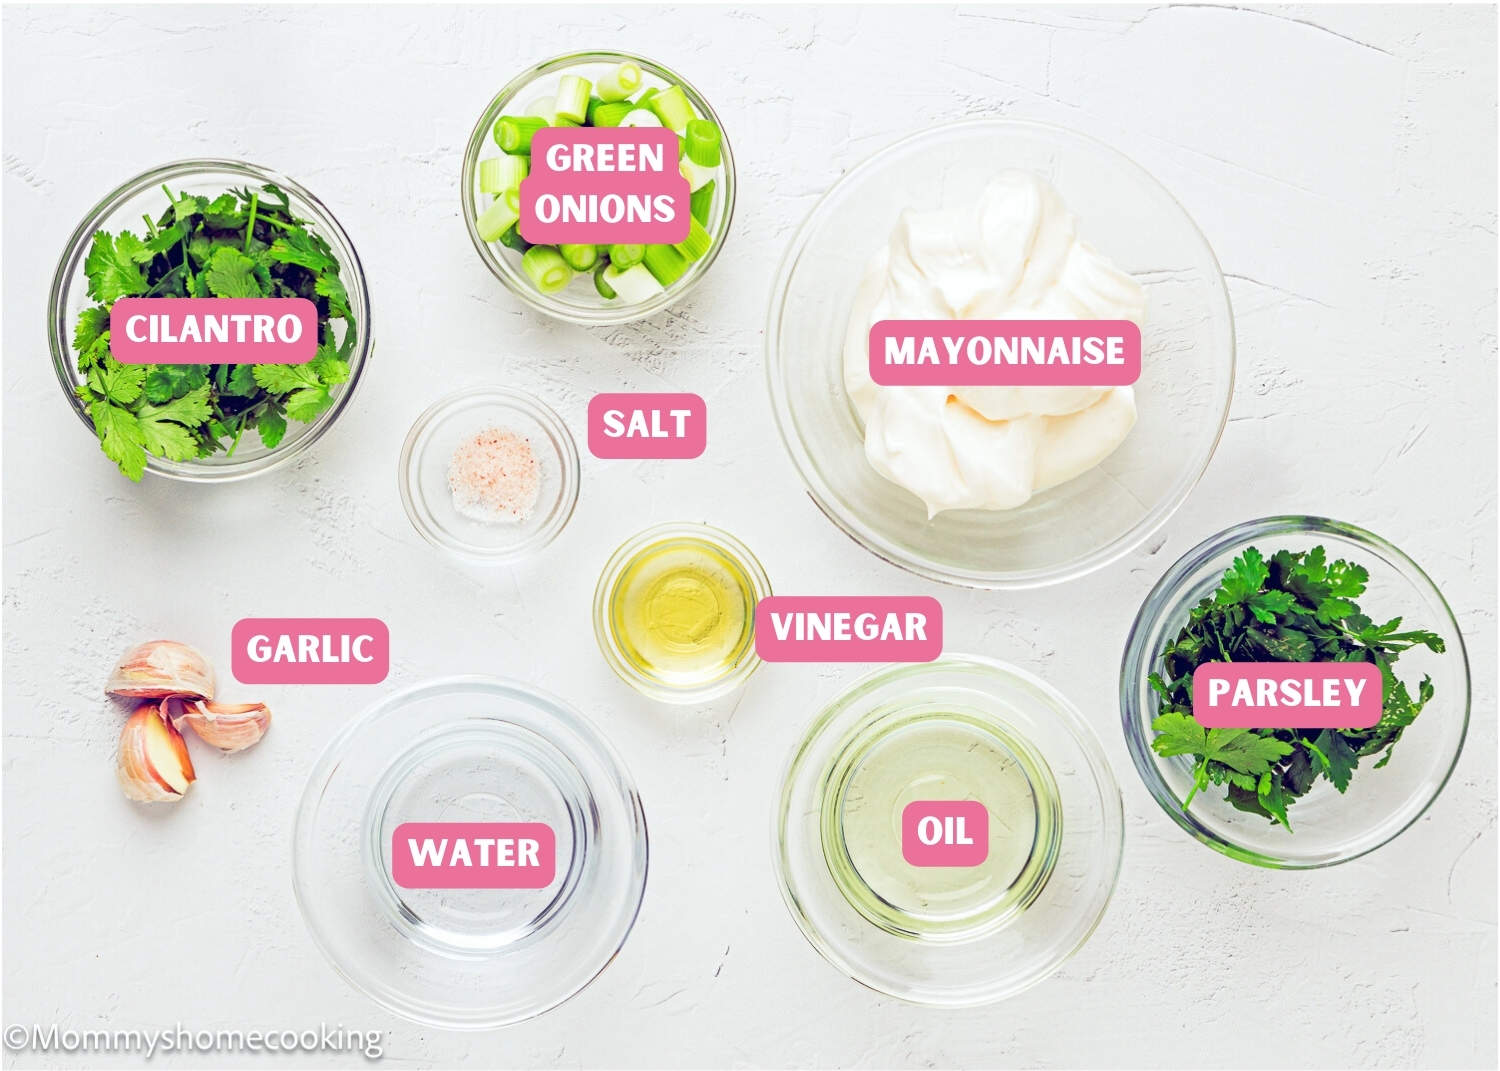 Ingredients needed to make Venezuelan Garlic Sauce (Salsa de Ajo Venezolana) with name tags.